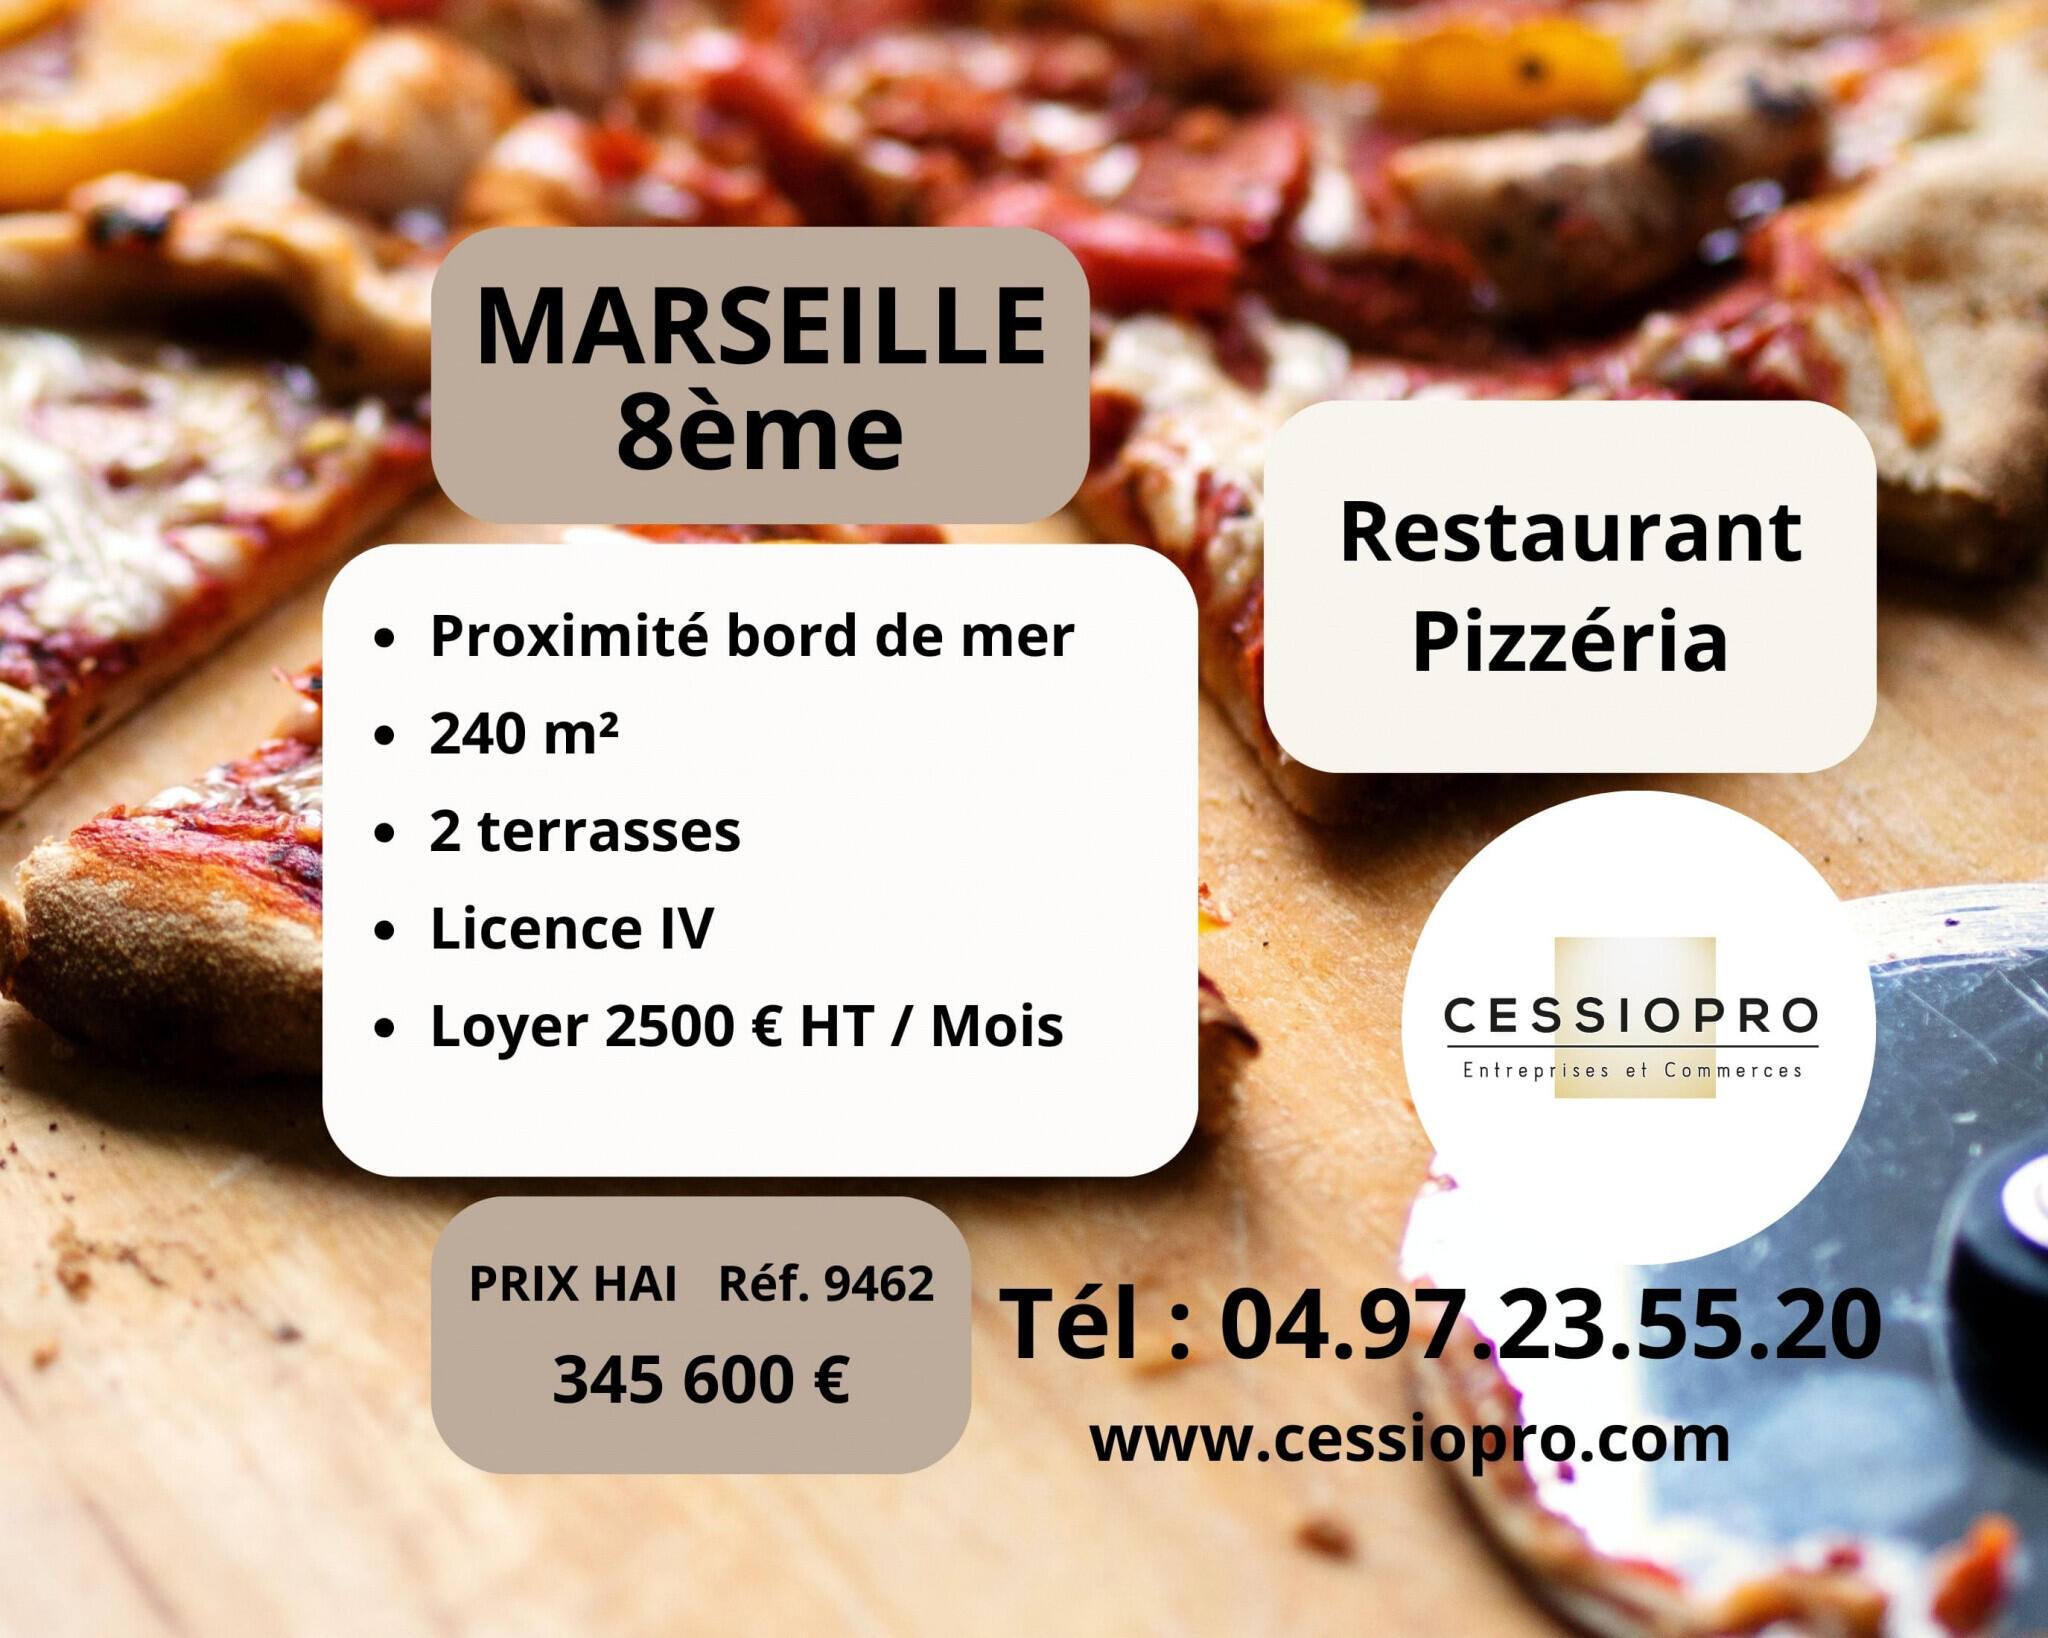 Vente restaurant pizzeria licence 4 à Marseille